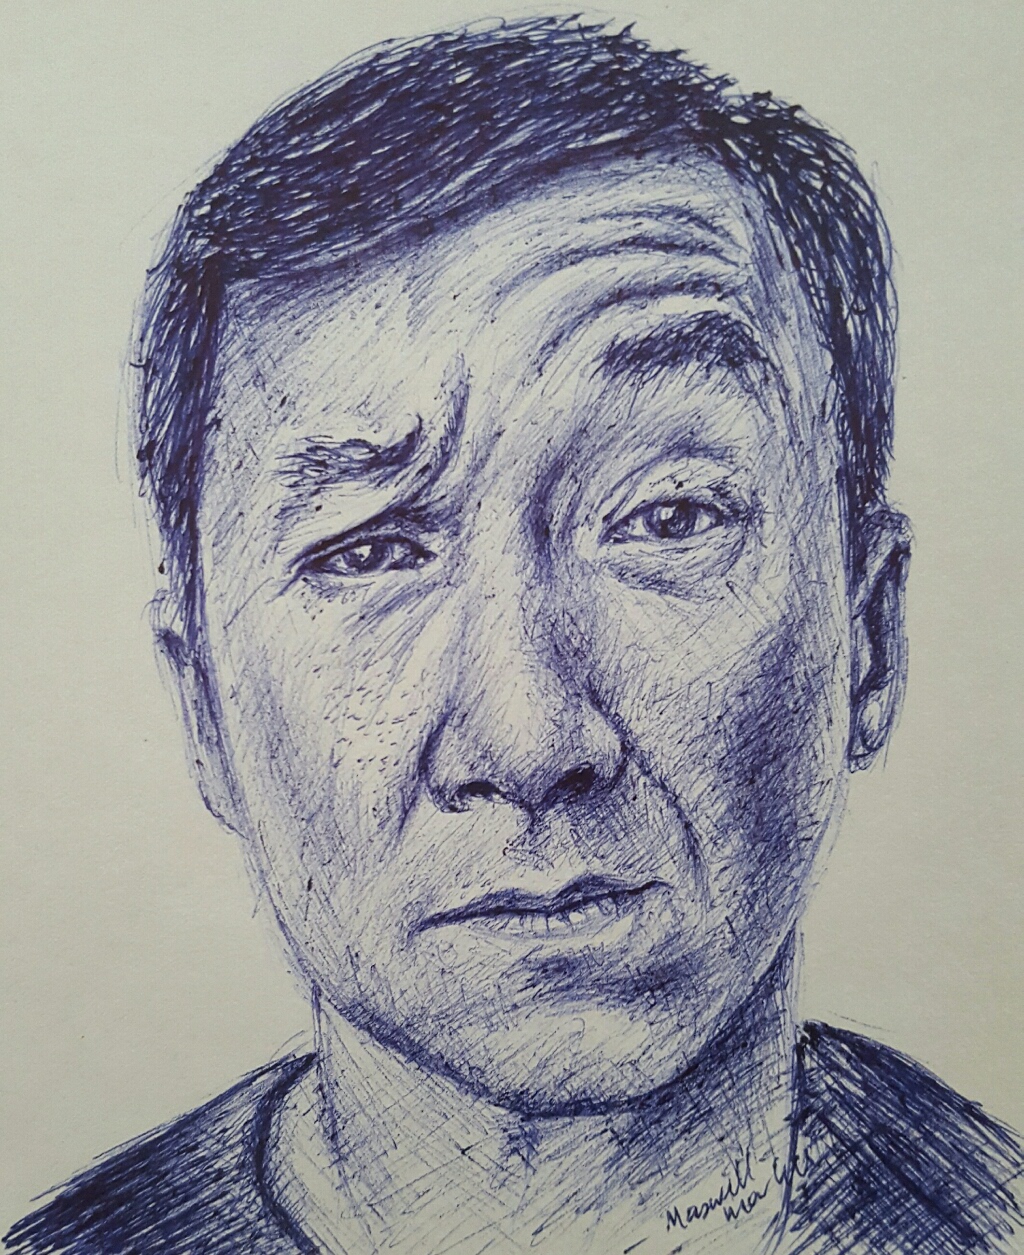 Portrait Workshop  websitewwwportraitworkshopcom  blogwwwcaricaturecomsg digital caricature sketch of Jackie Chan 成龍